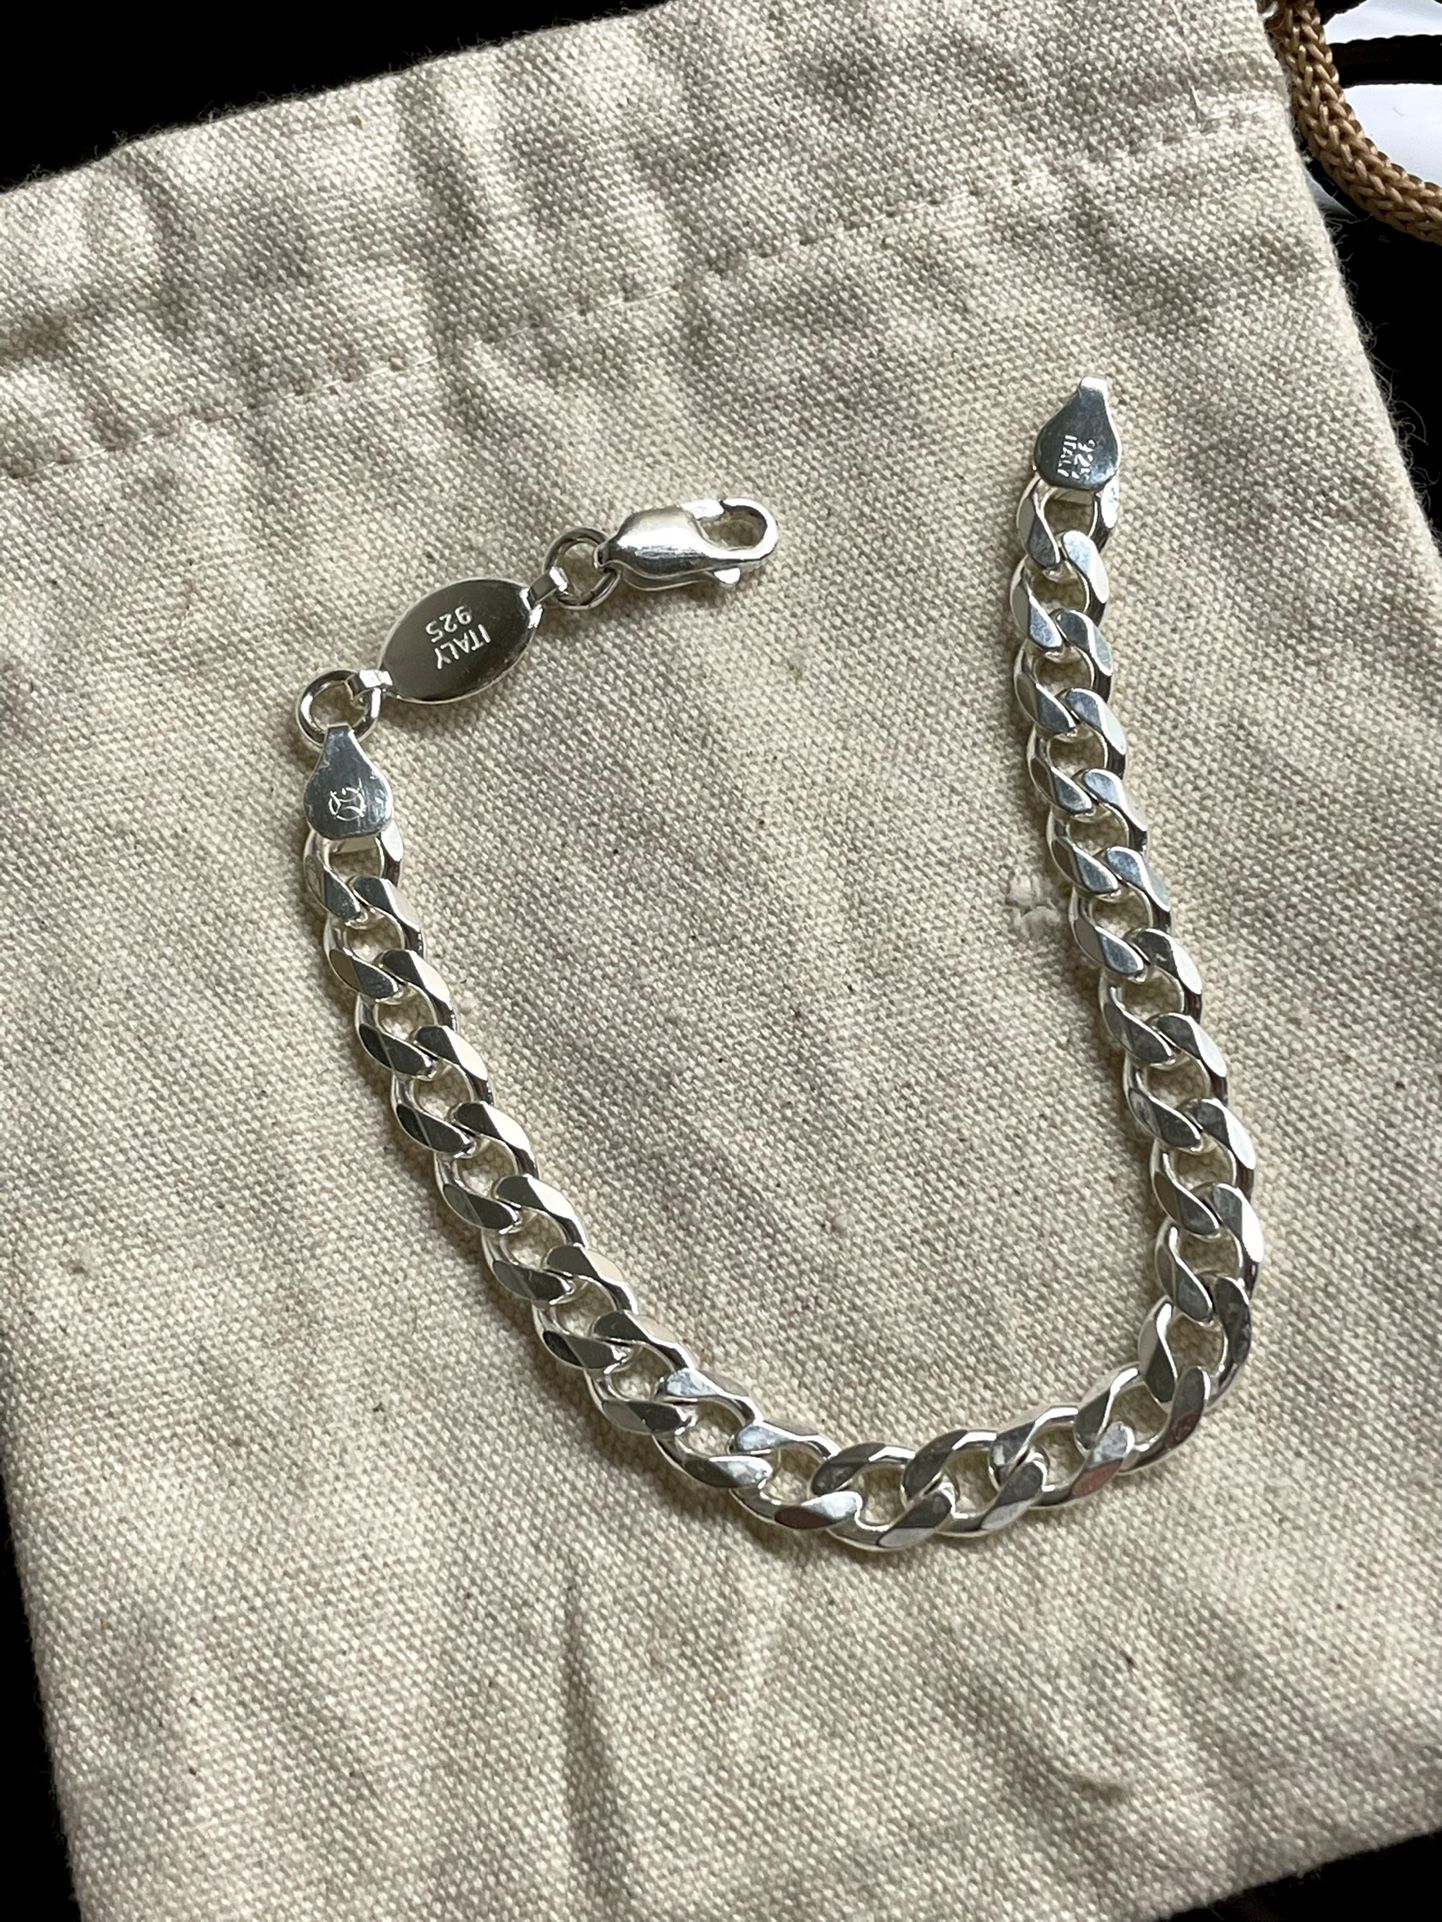 925 Silver Bracelet 